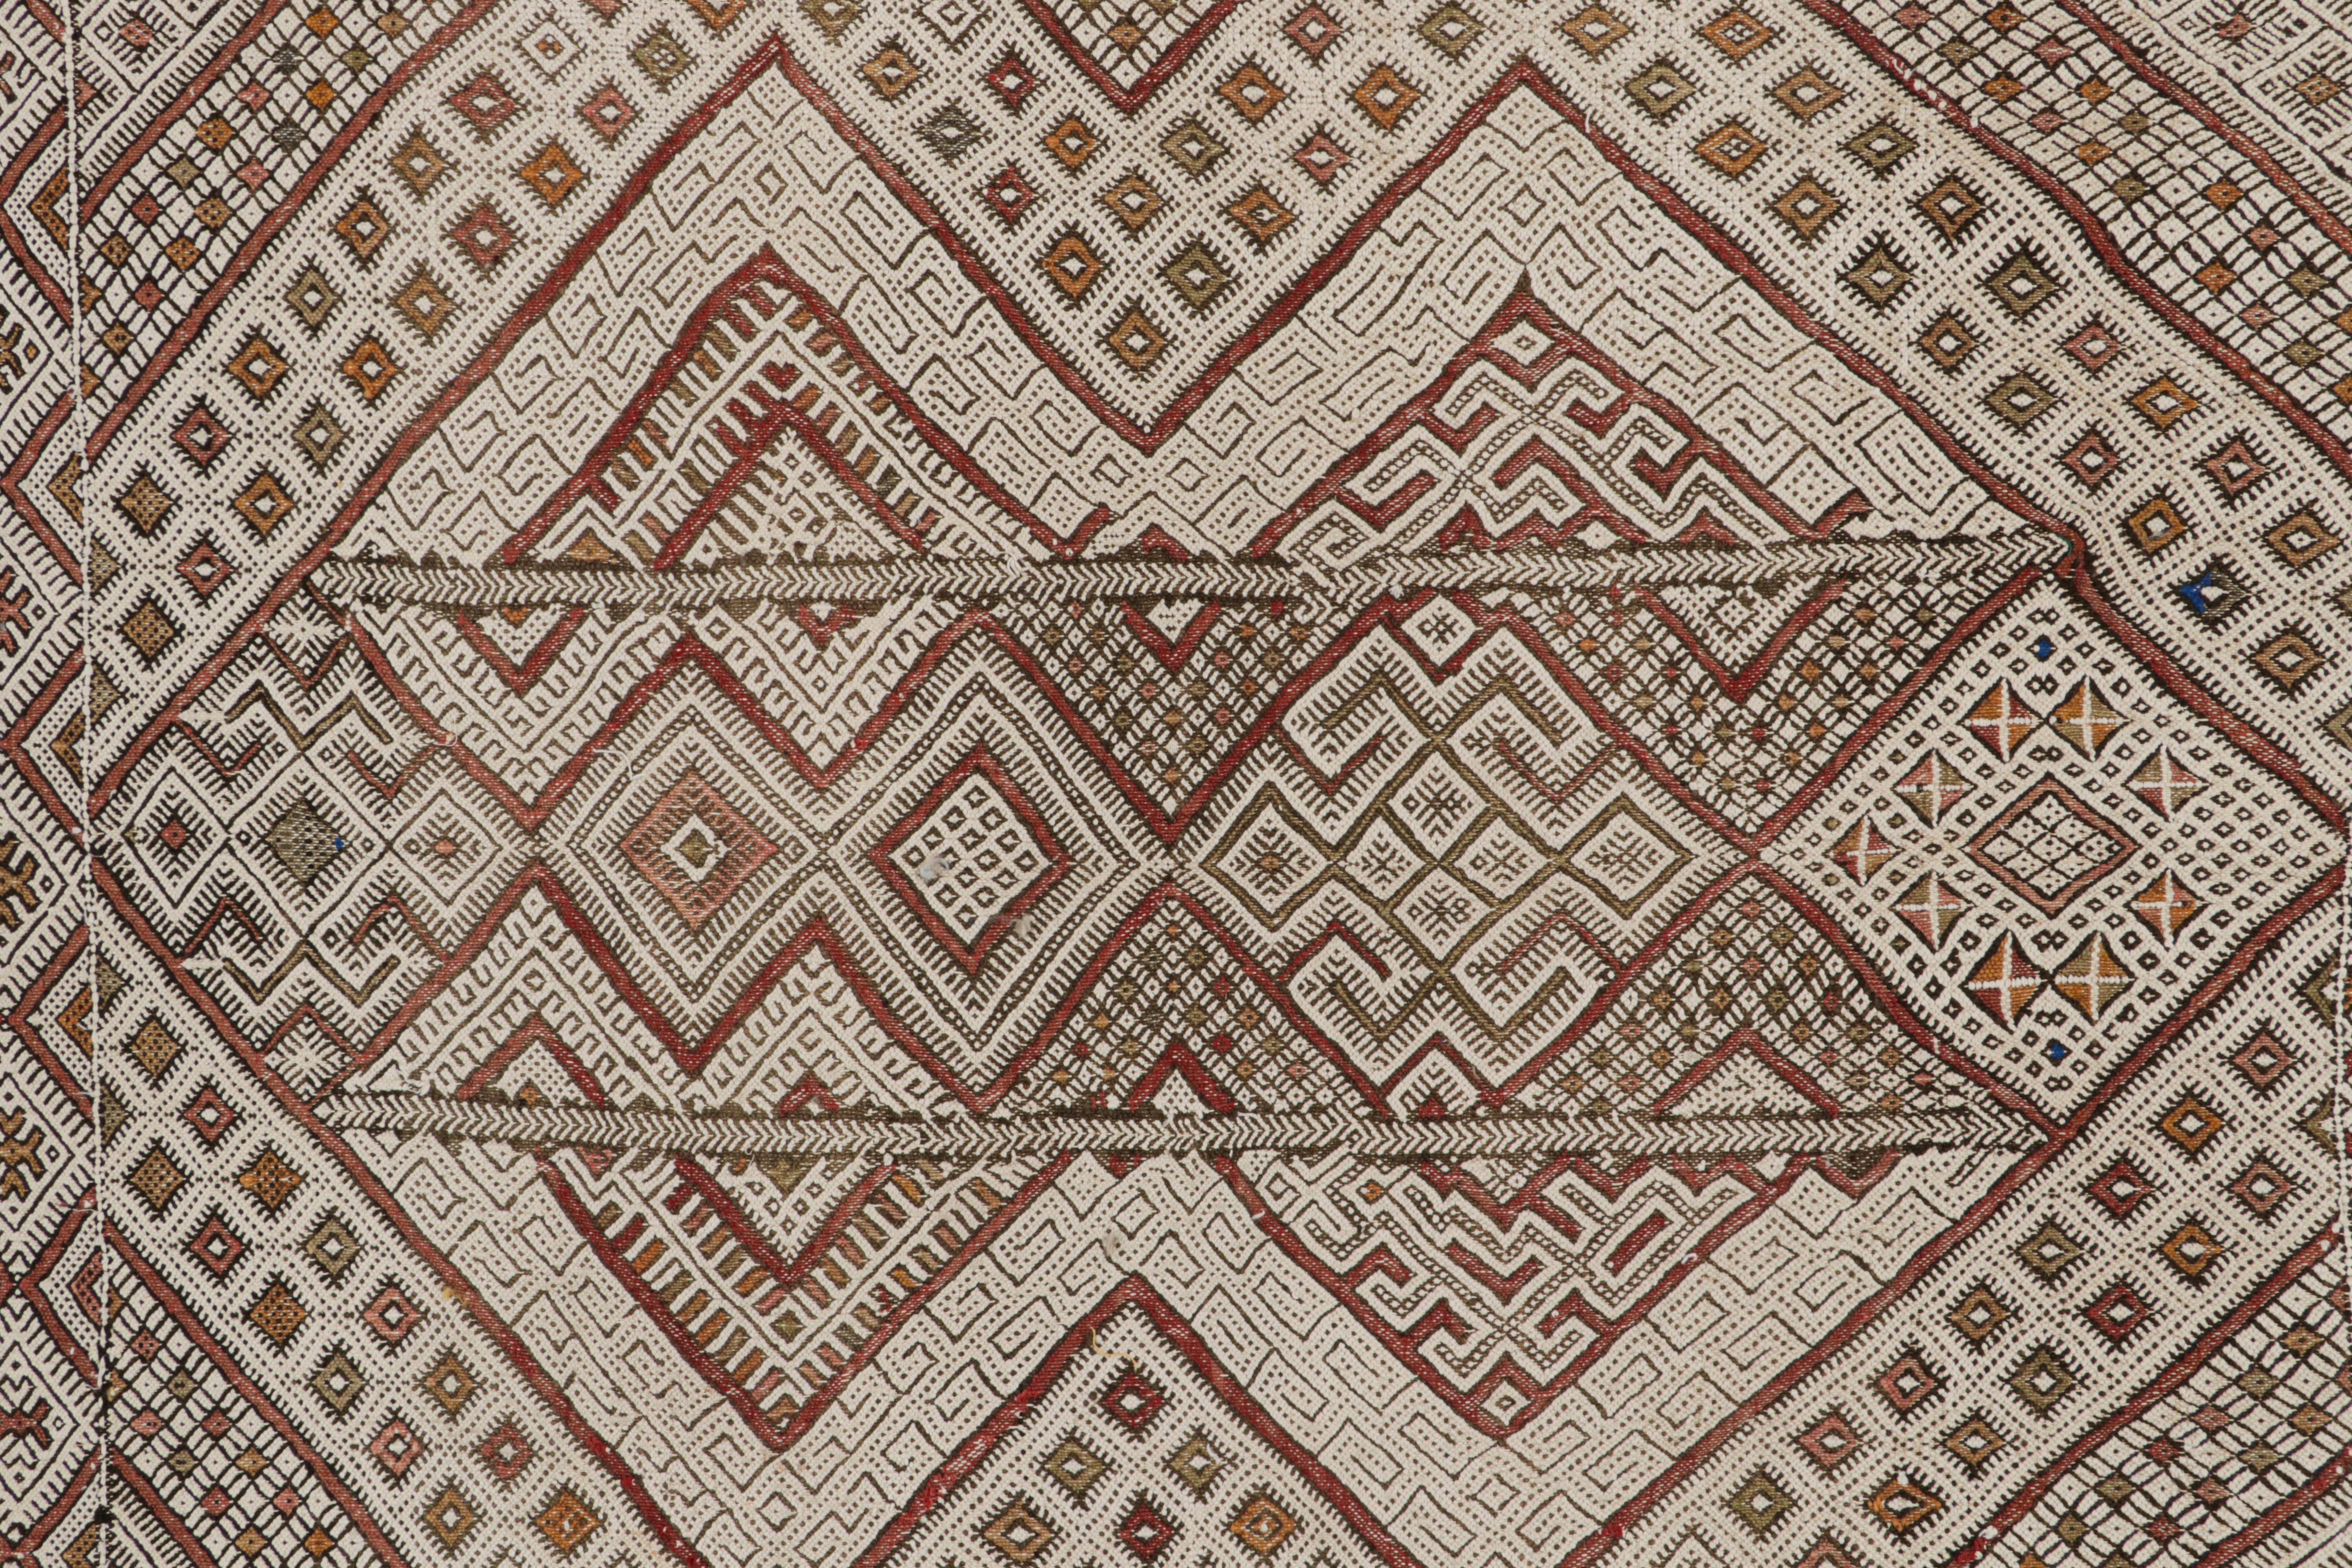 Wool Vintage Zayane Moroccan Kilim in White & Brown Tribal Patterns by Rug & Kilim For Sale